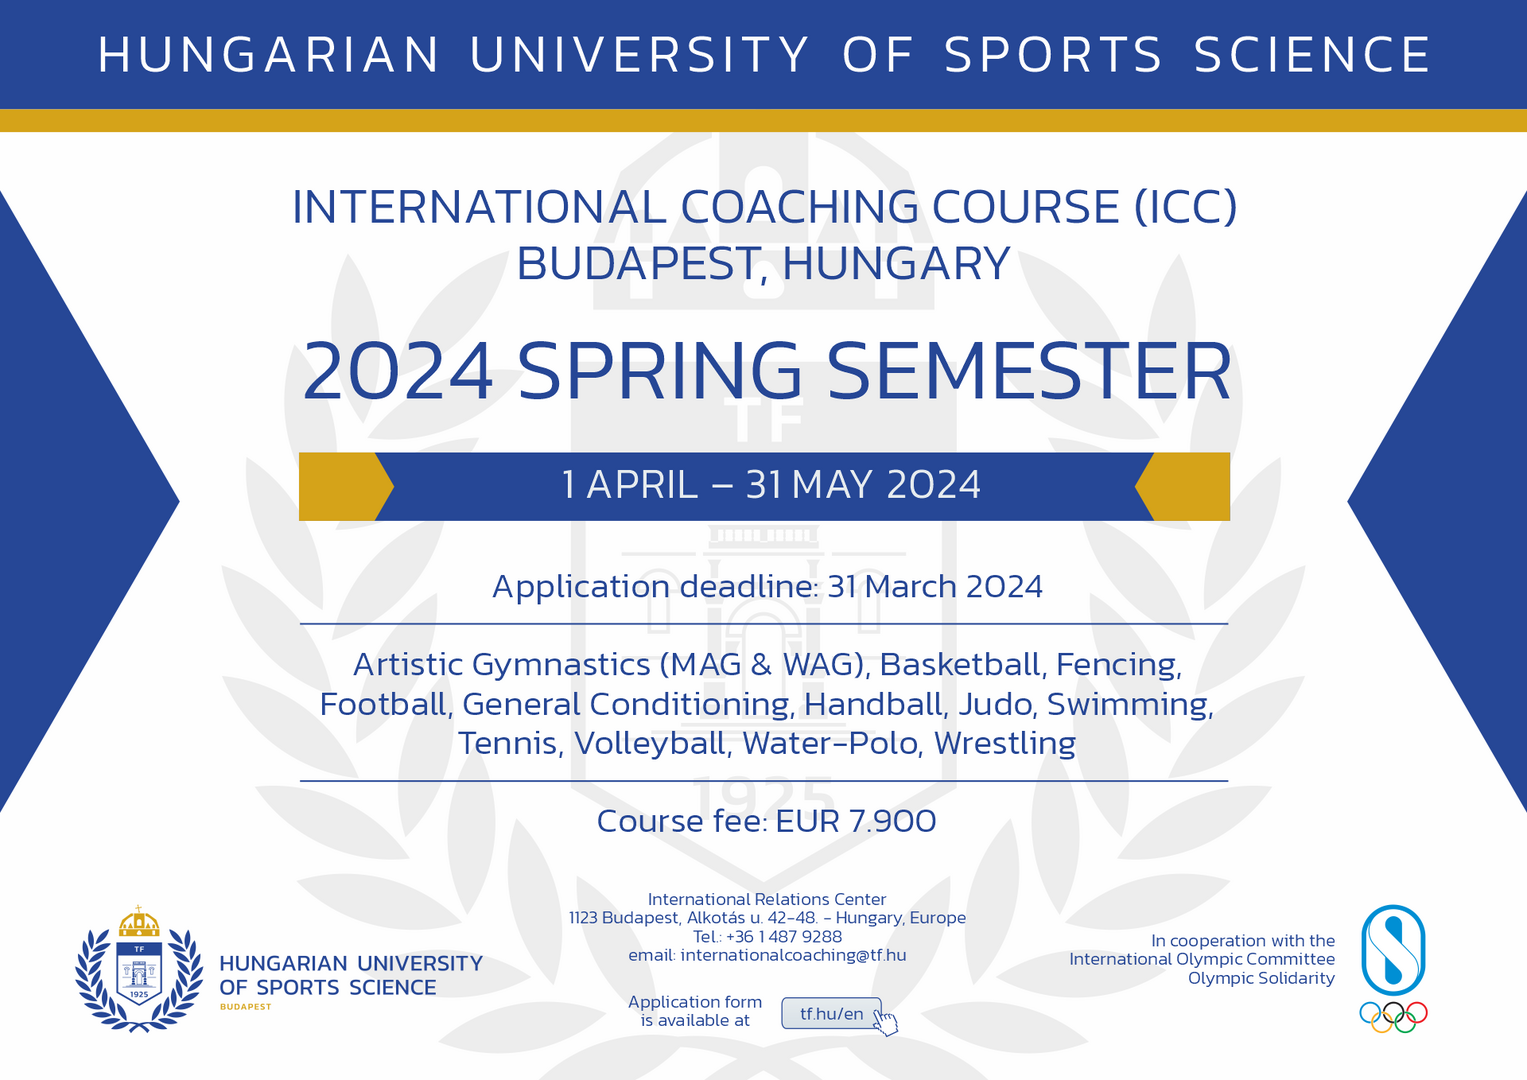 HUSS International Coaching Course flyer